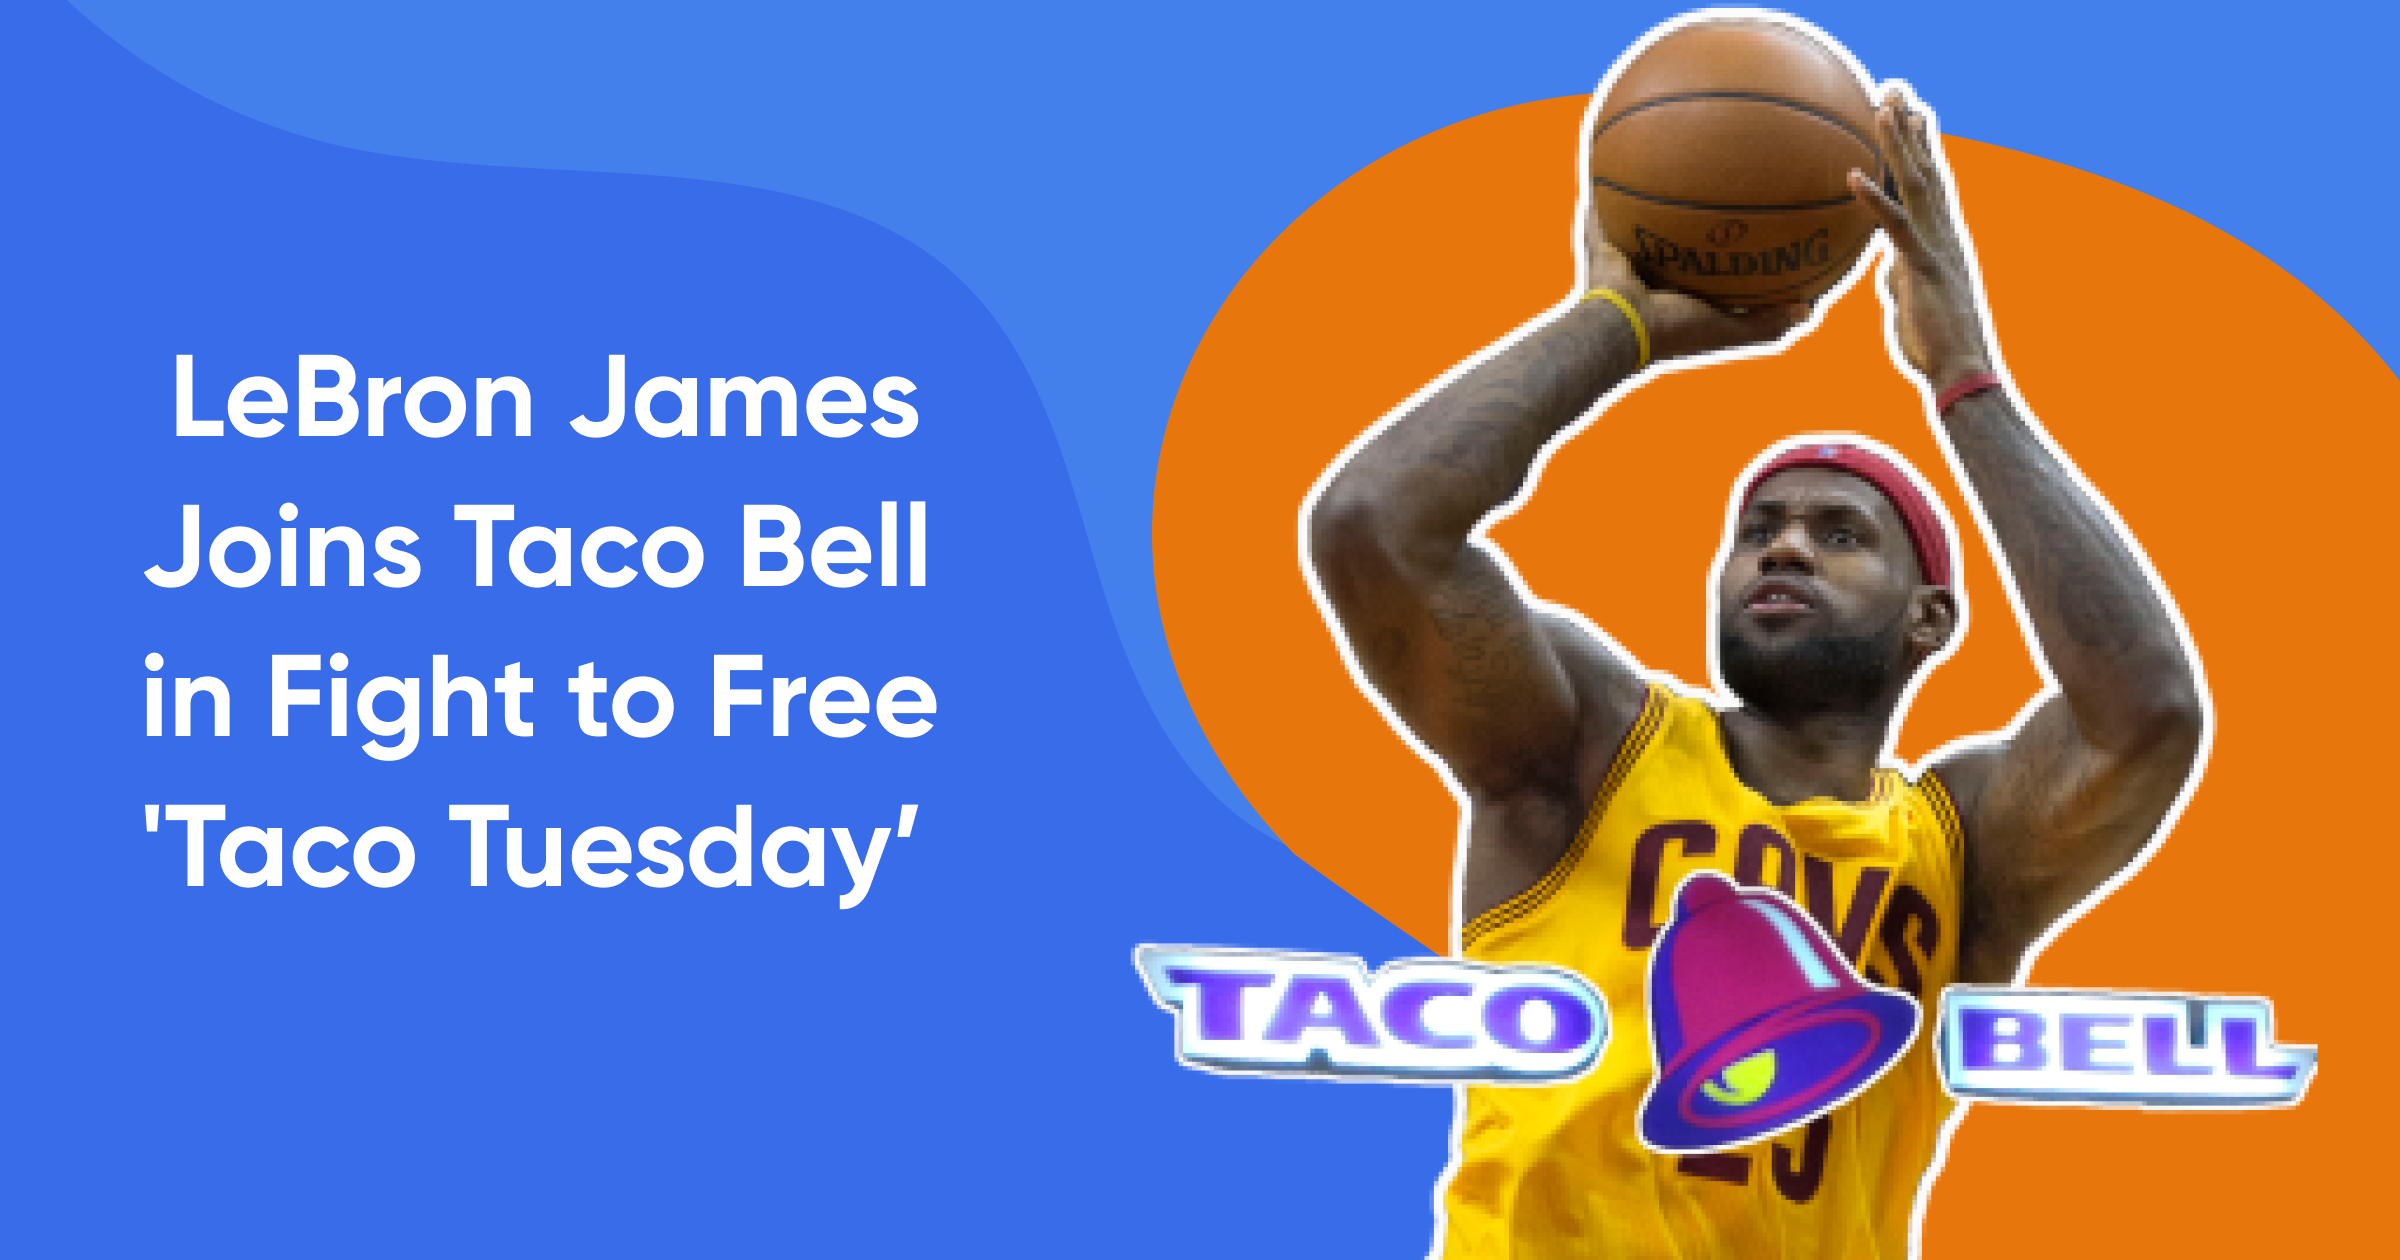 LeBron James Taco Bell trademark dispute